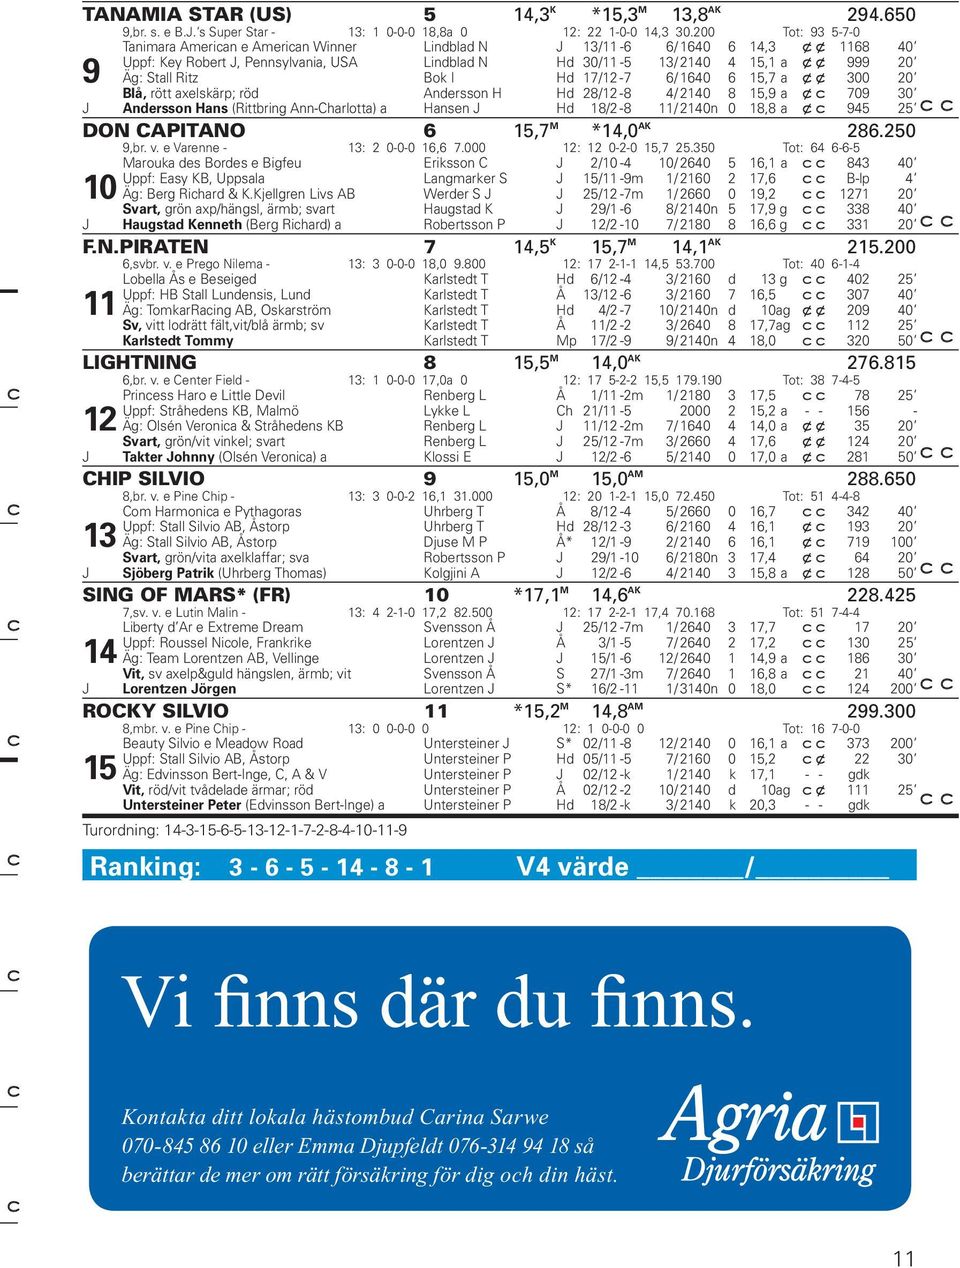 Stall Ritz Bok I Hd 17/12-7 6/ 1640 6 15,7 a x x 300 20 Blå, rött axelskärp; röd Andersson H Hd 28/12-8 4/ 2140 8 15,9 a x 709 30 J Andersson Hans (Rittbring Ann-Charlotta) a Hansen J Hd 18/2-8 11/